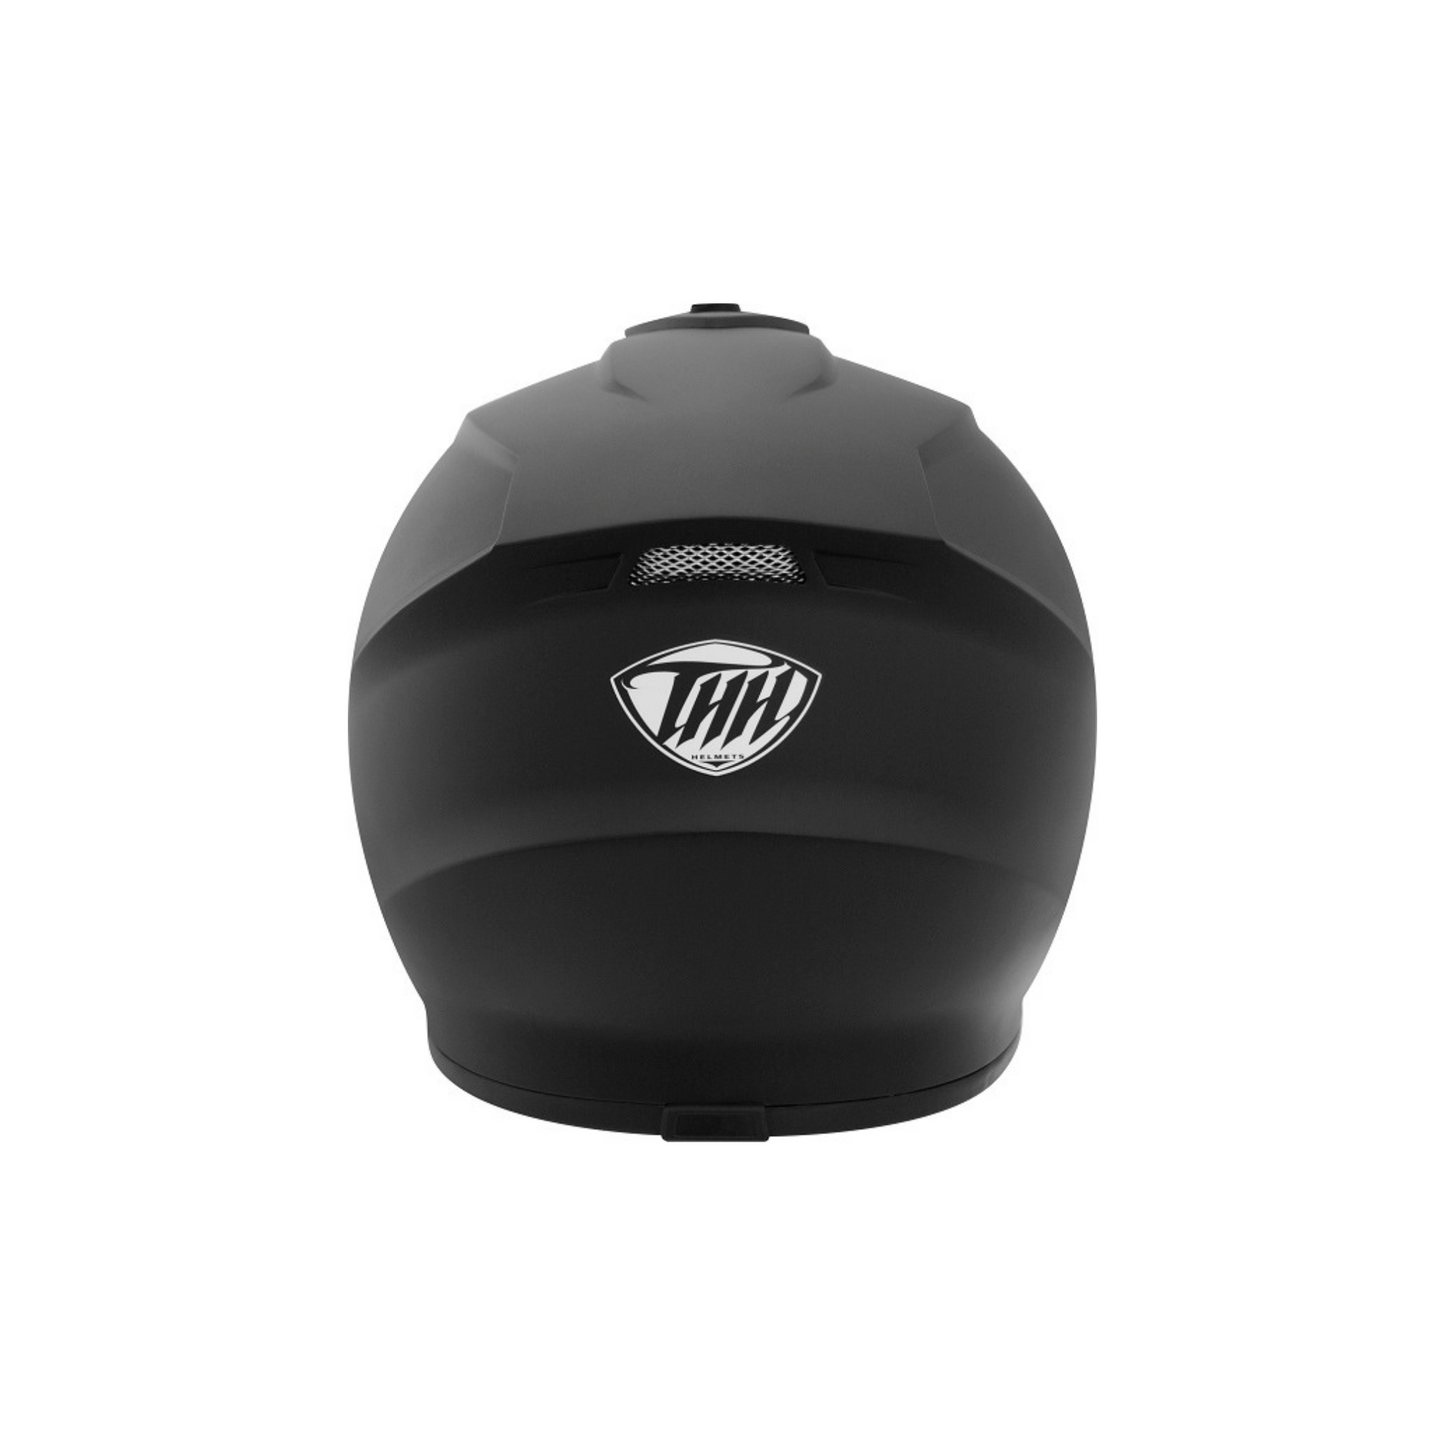 THH T710X Matte Black Youth Helmet